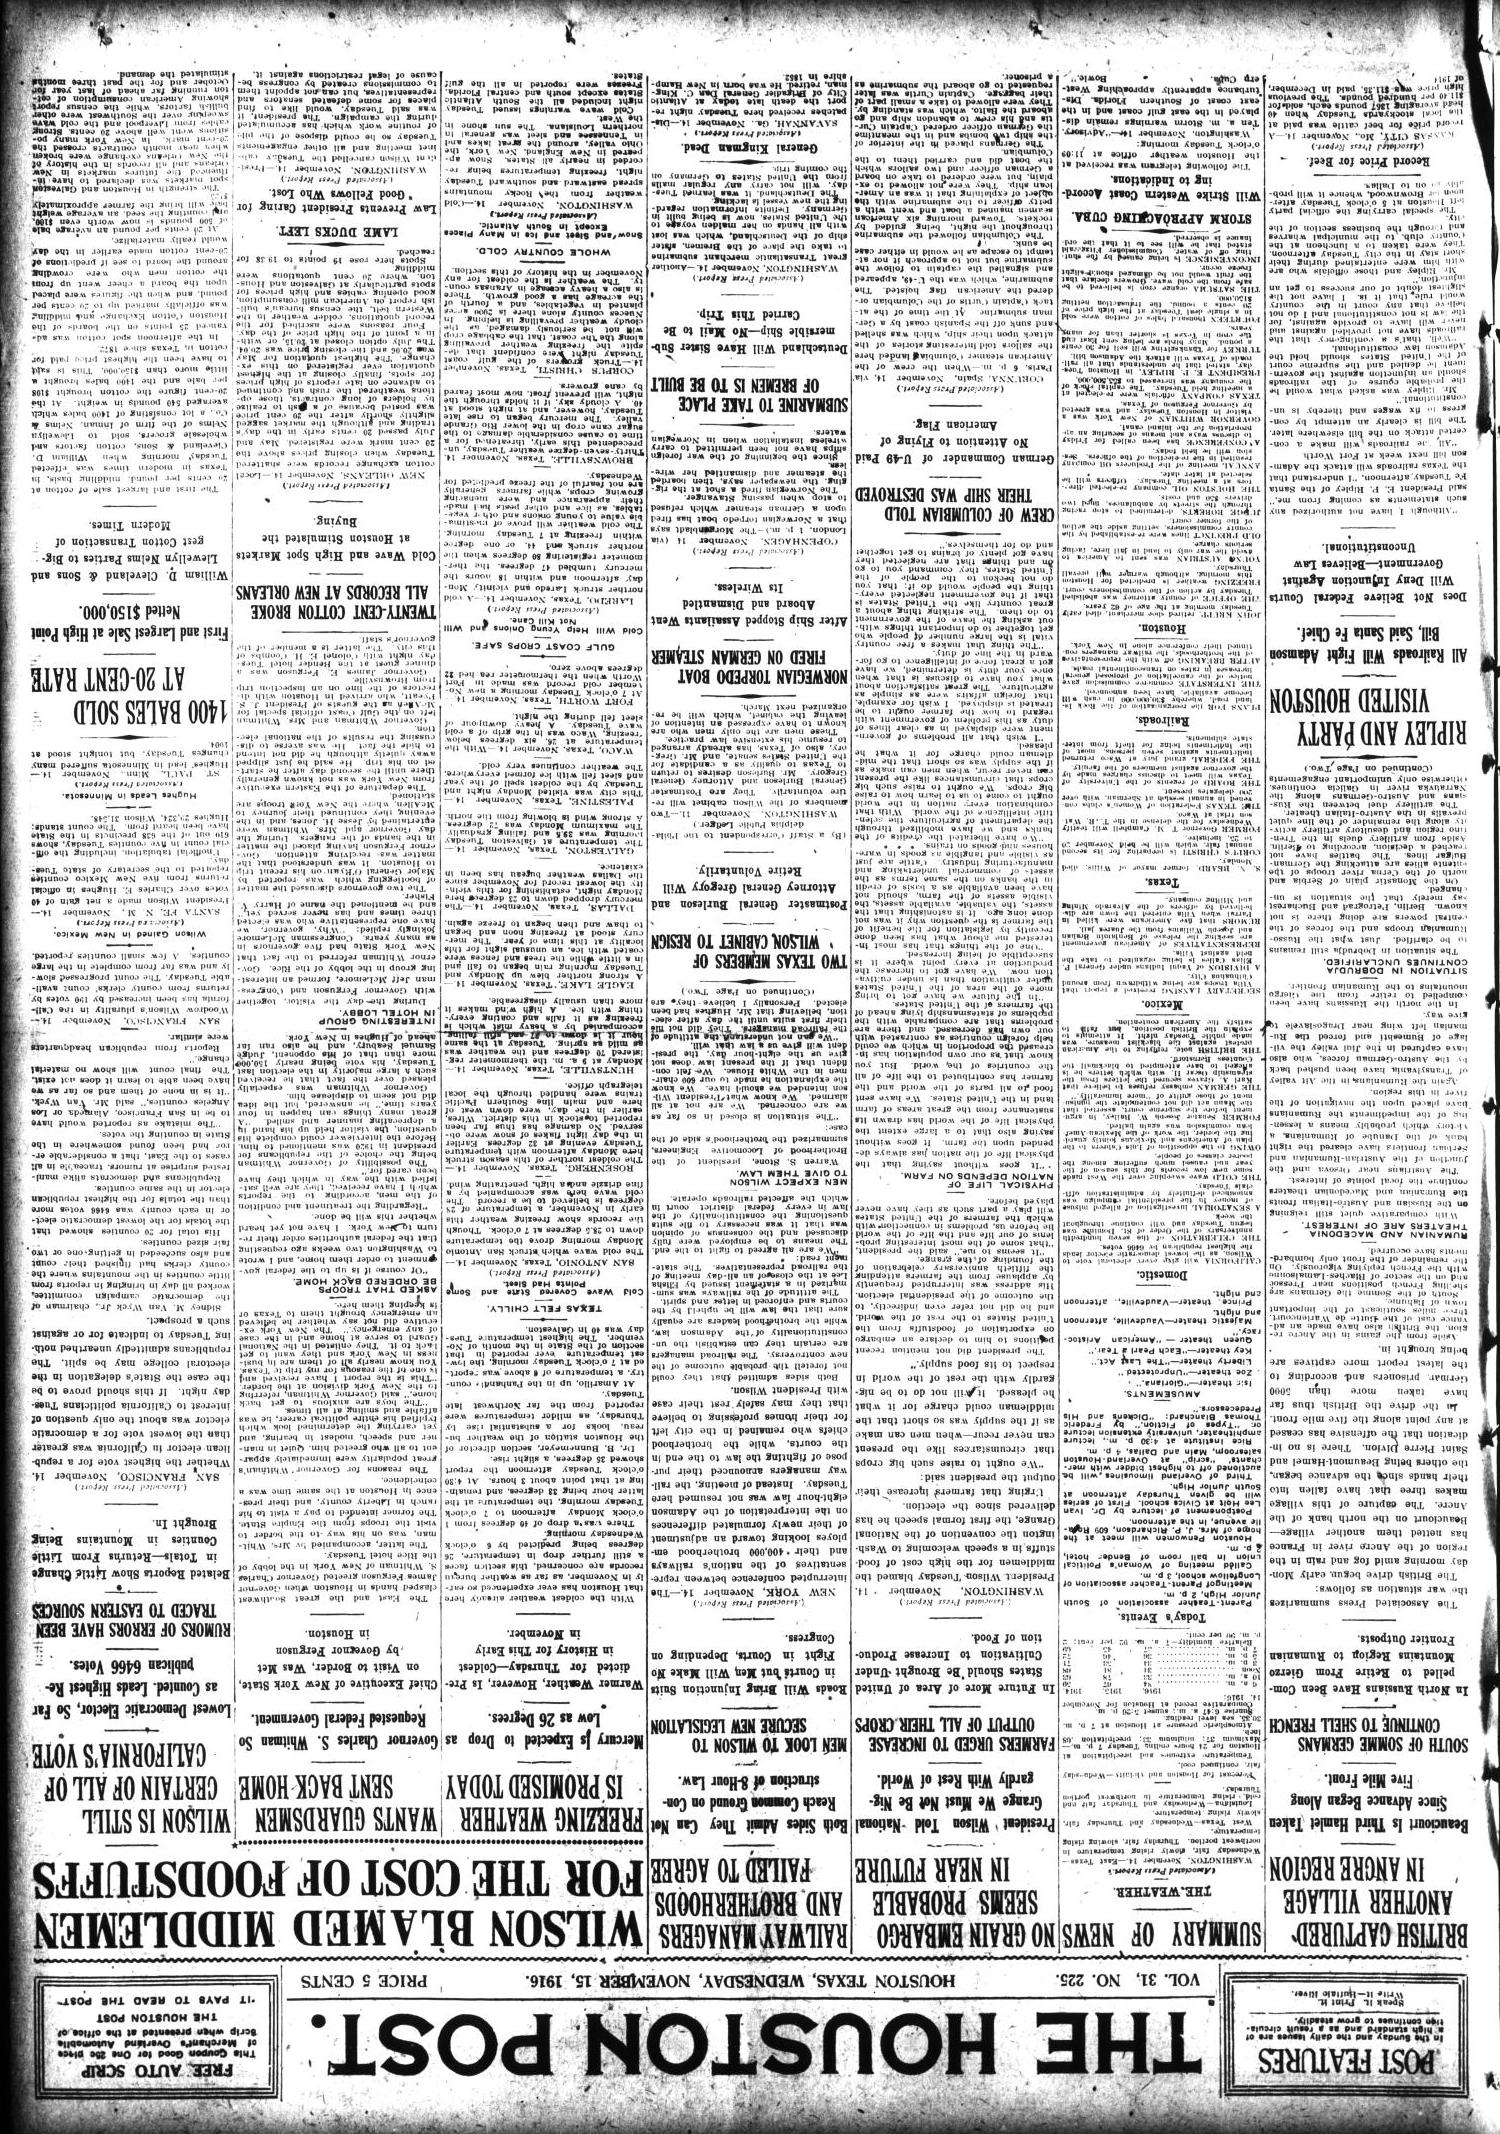 The Houston Post. (Houston, Tex.), Vol. 31, No. 225, Ed. 1 Wednesday, November 15, 1916
                                                
                                                    [Sequence #]: 1 of 14
                                                